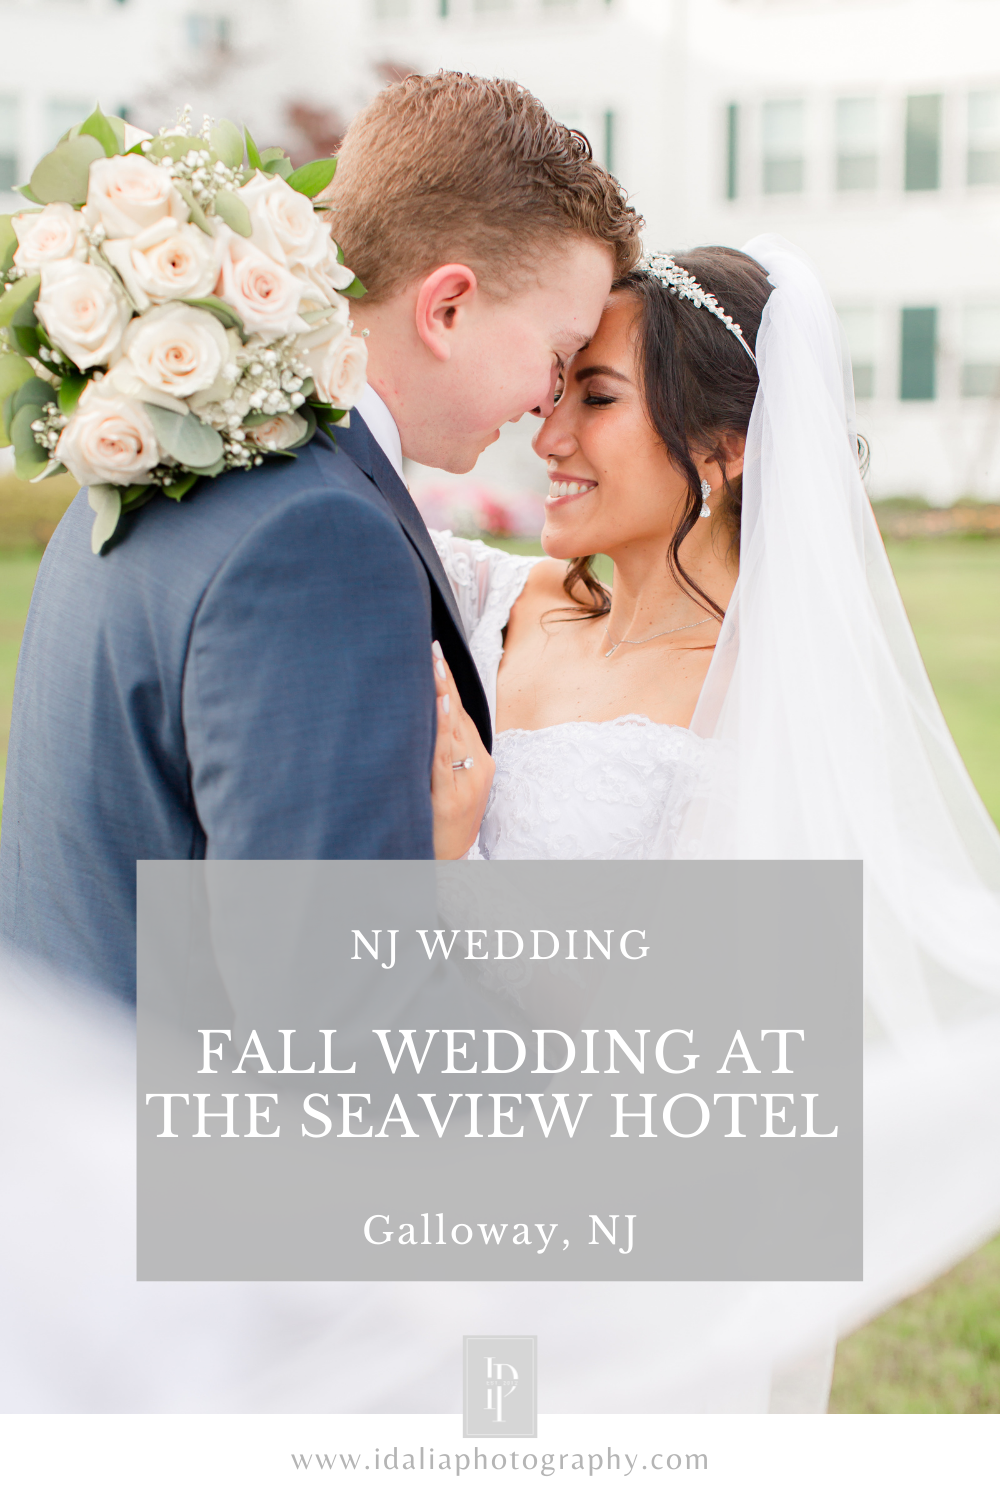 Seaview Hotel wedding photos by Idalia Photography